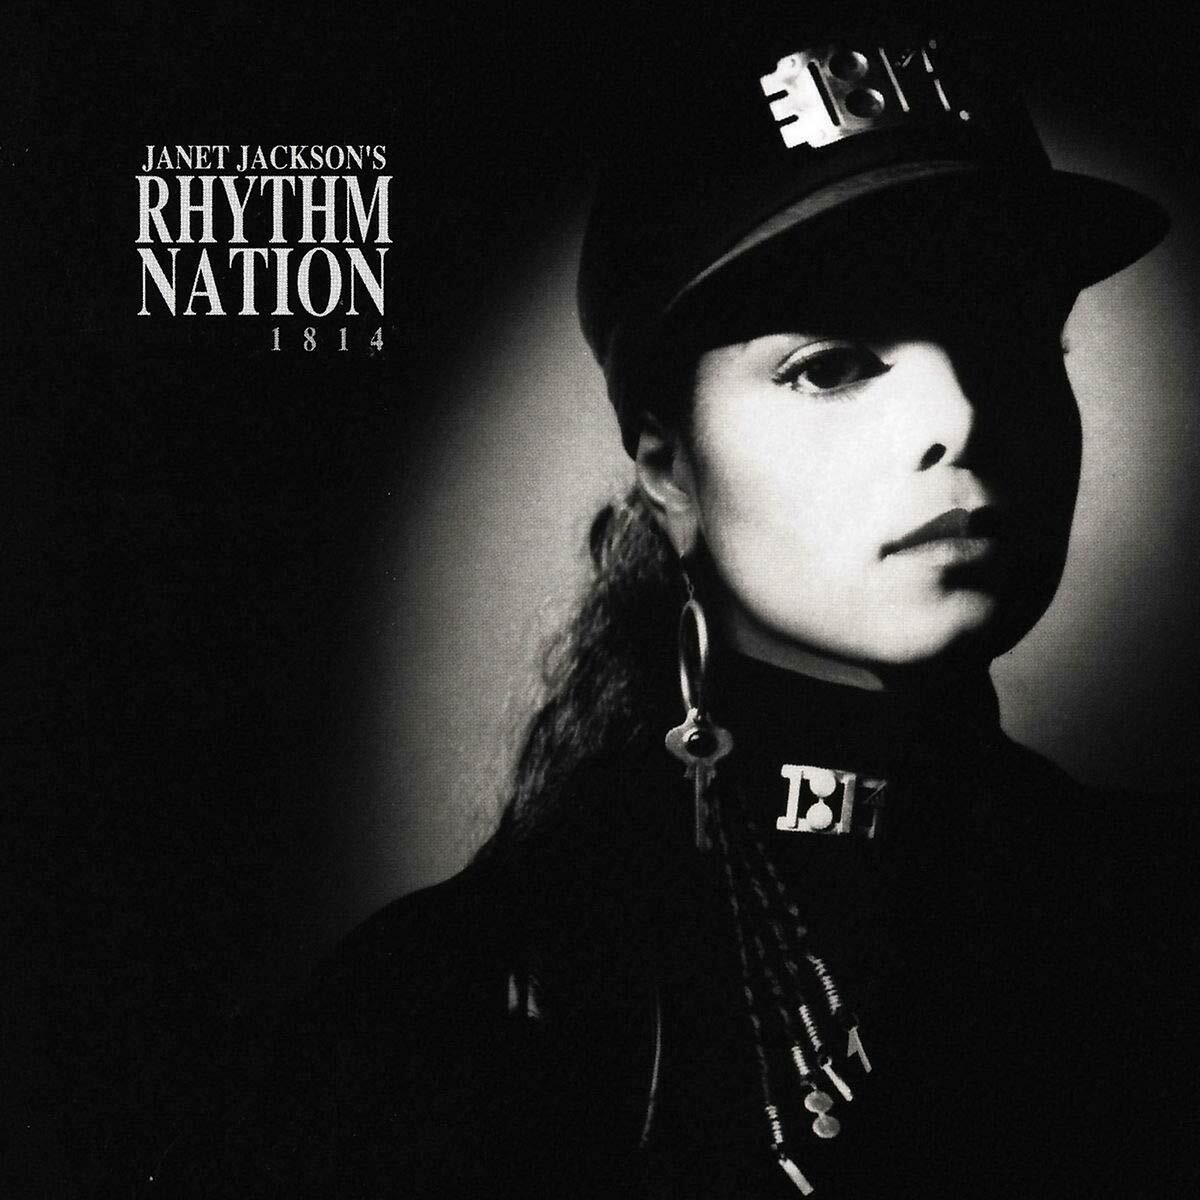 Janet Jackson "Janet Jackson's Rhythm Nation"